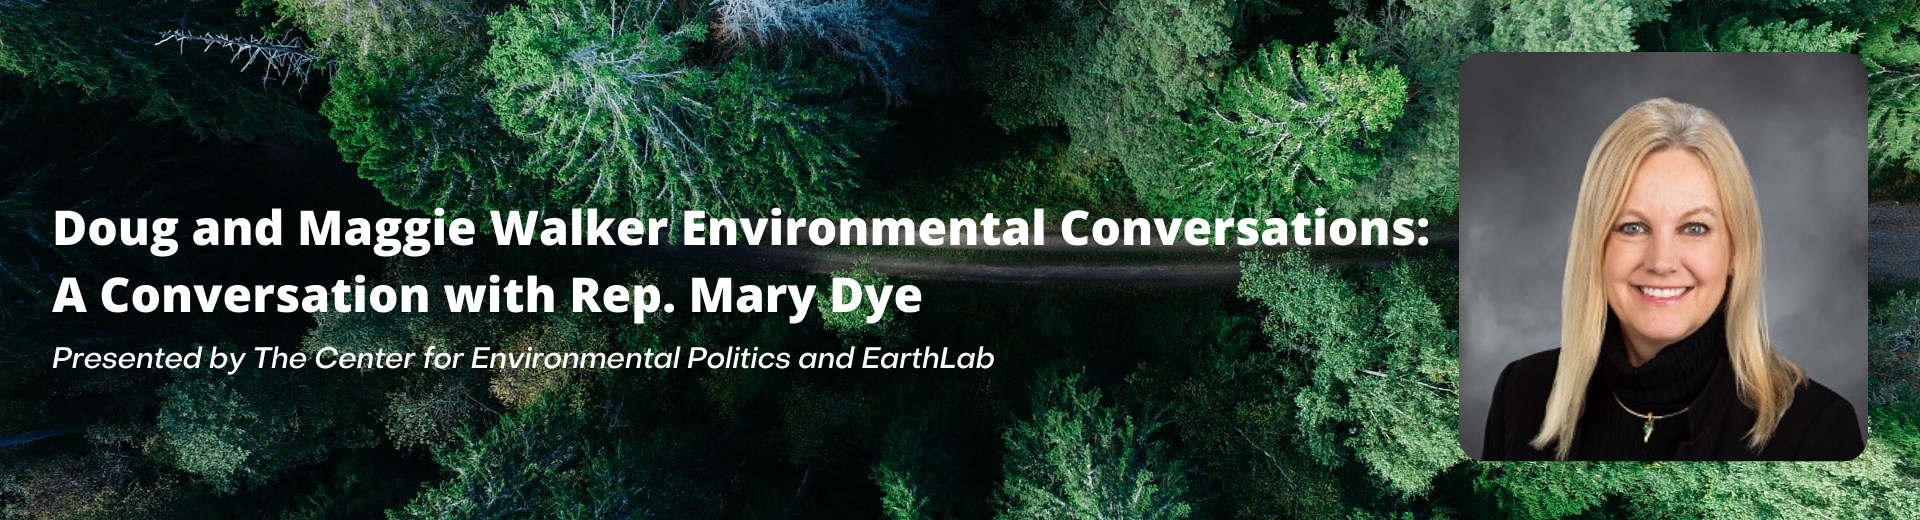 Environmental Conversations: Rep. Mary Dye